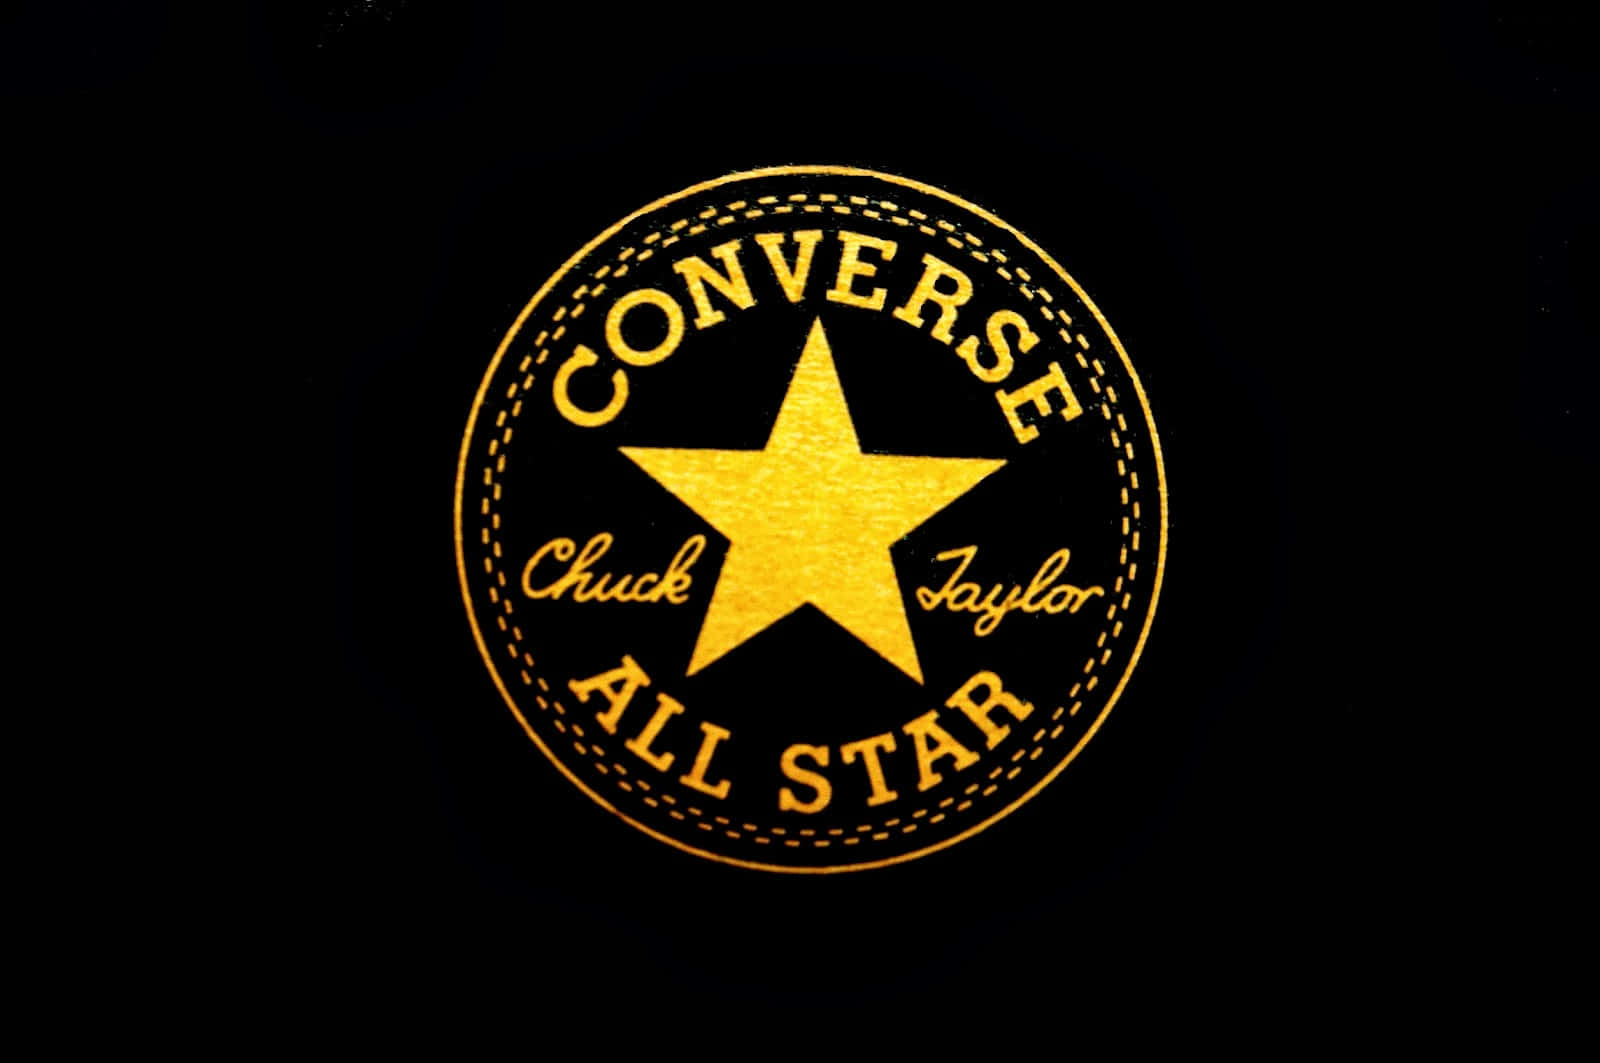 The iconic Converse logo